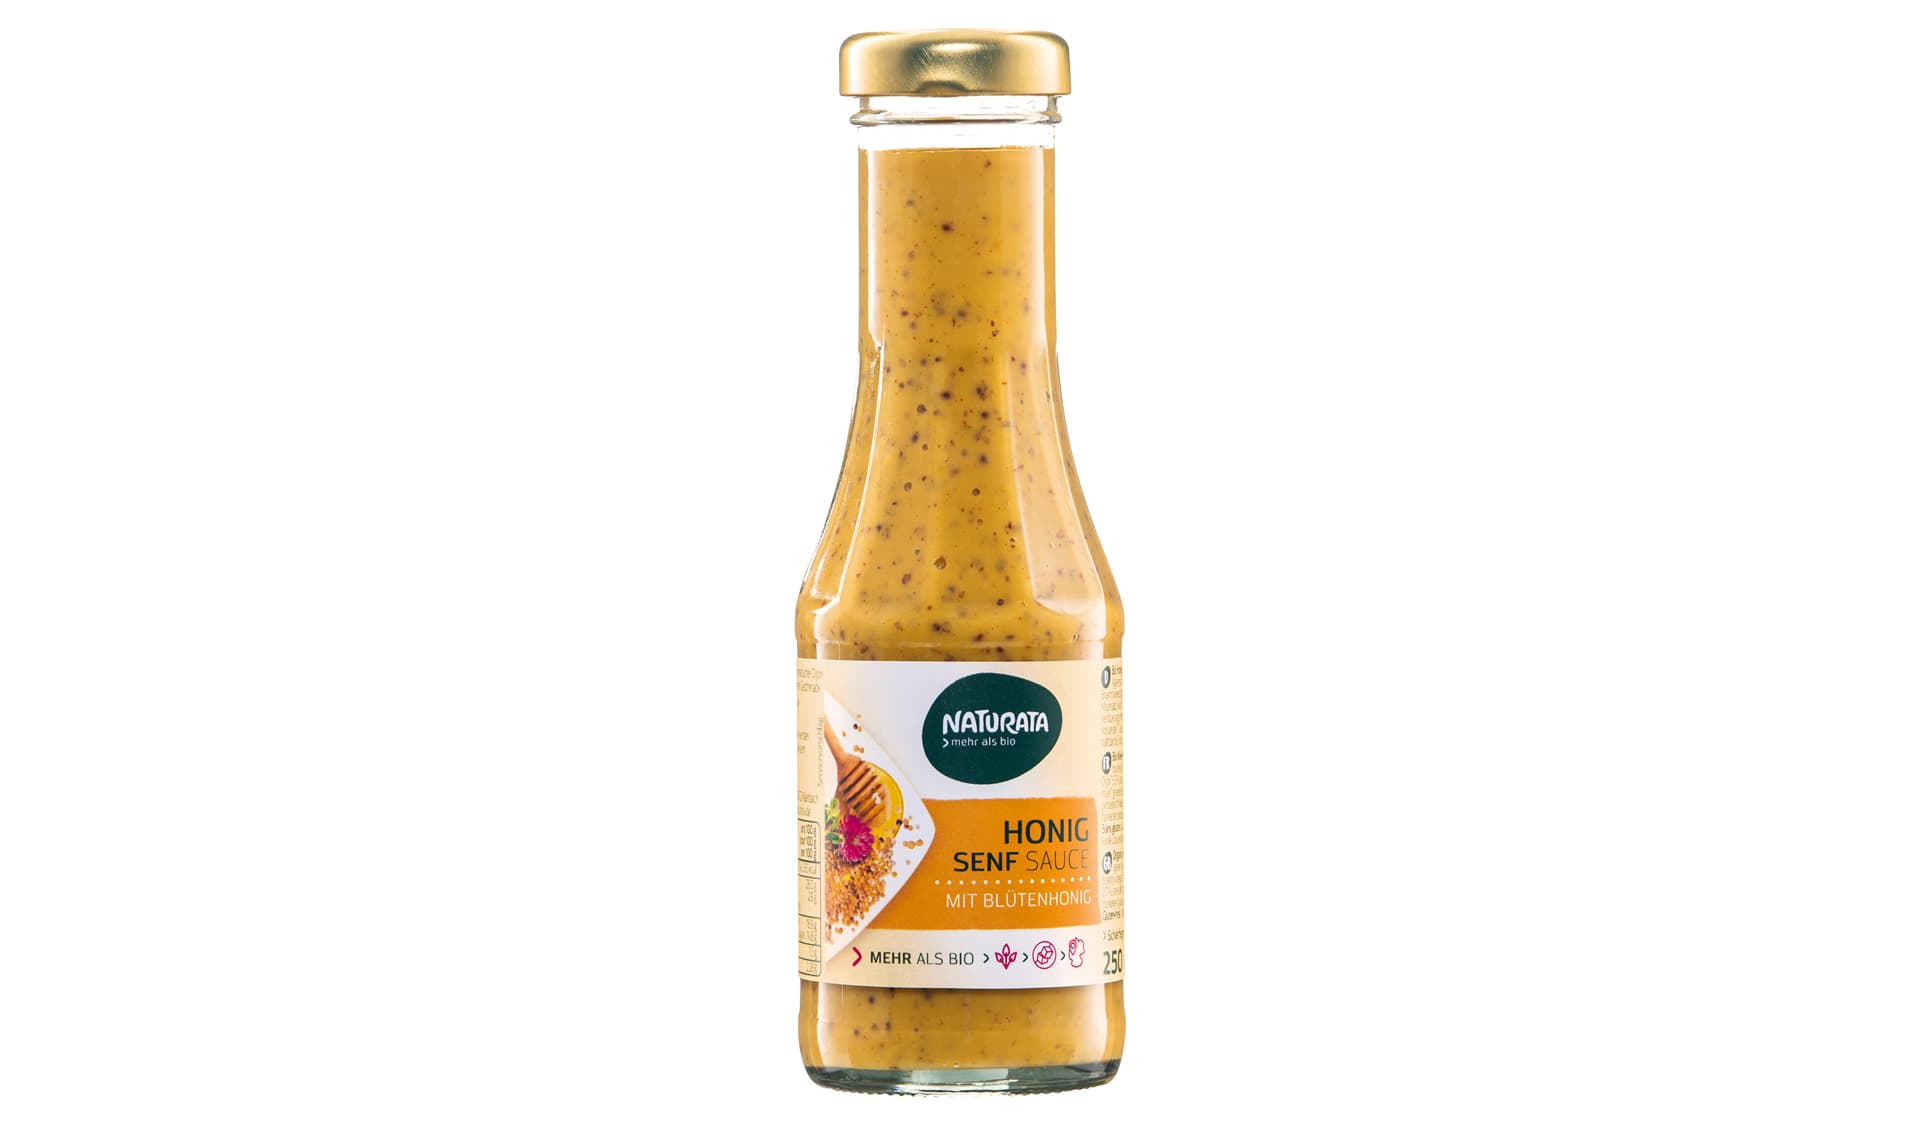 Naturata Honig Senf Sauce (www.naturata.de)